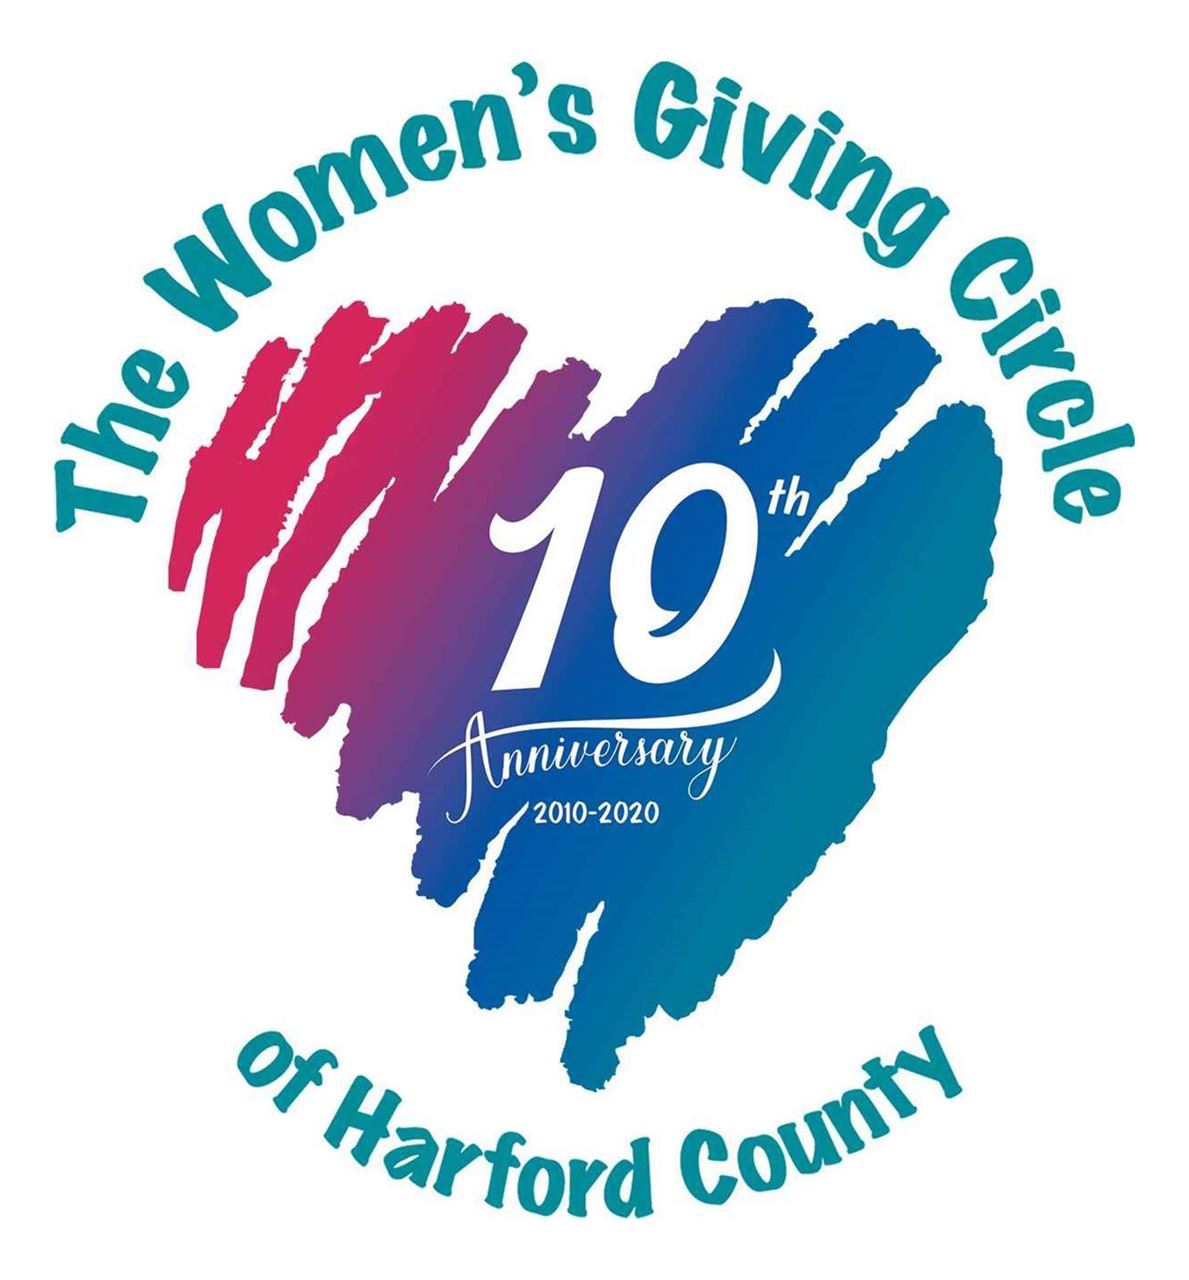 Women's Giving Circle tenth anniversary logo